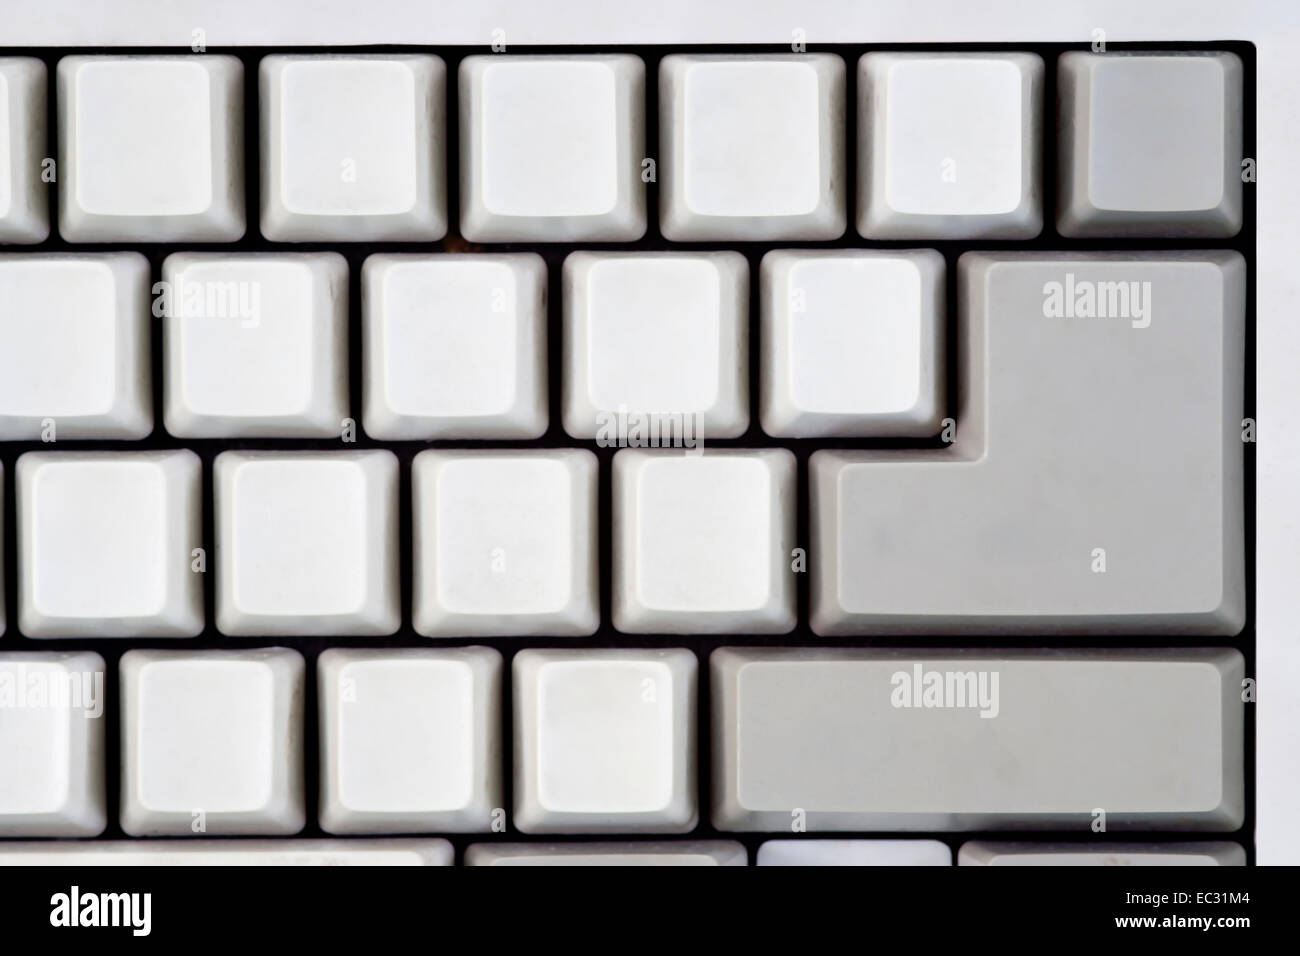 Detail of the blank keyboard - key set - enter Stock Photo